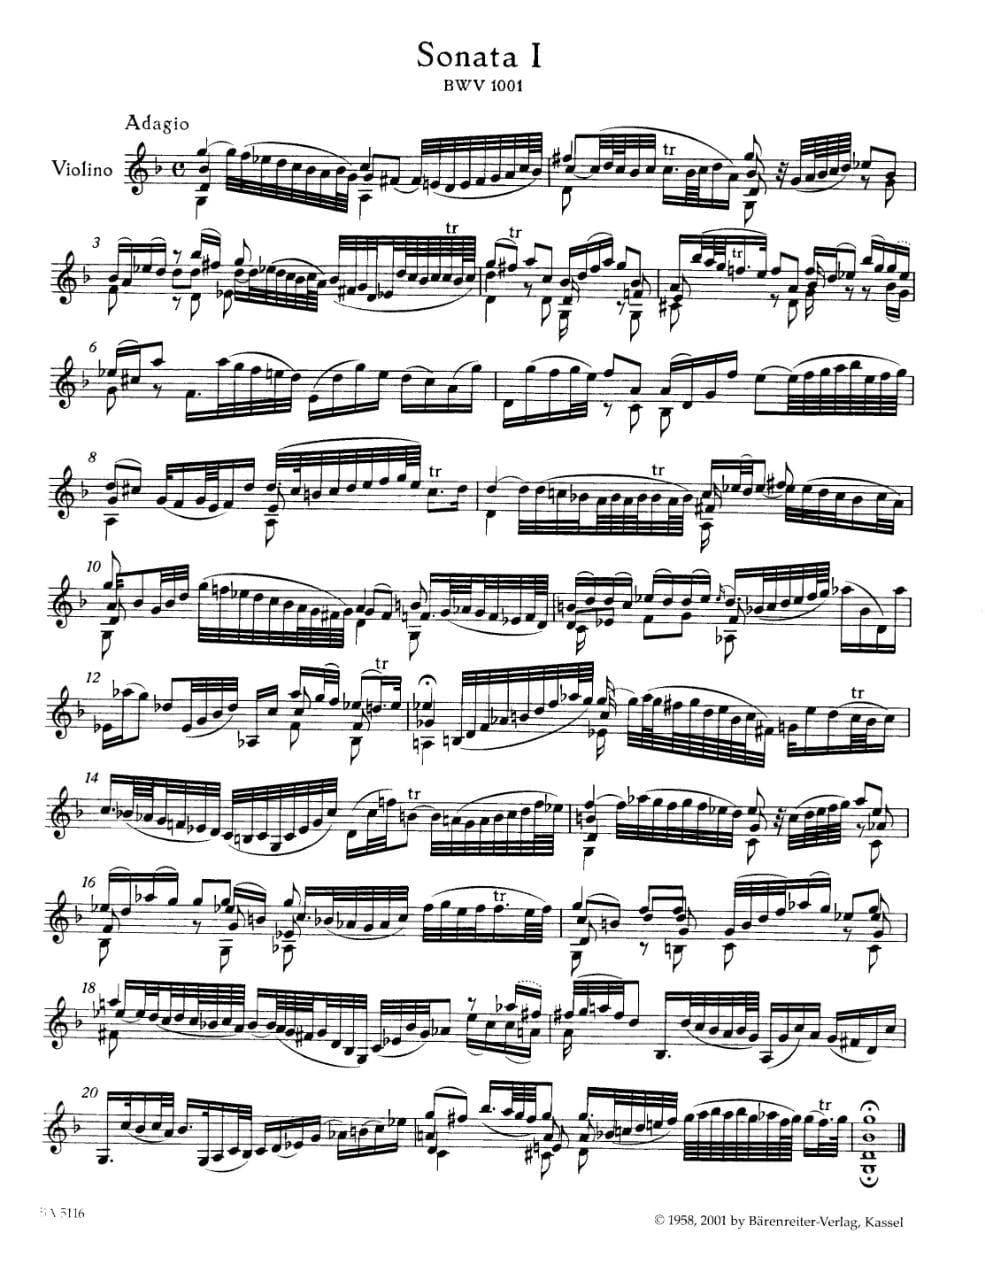 Bach, JS - 6 Sonatas and Partitas, BWV 1001-1006 - Solo Violin - edited by Günter Hauswald - Bärenreiter Verlag URTEXT